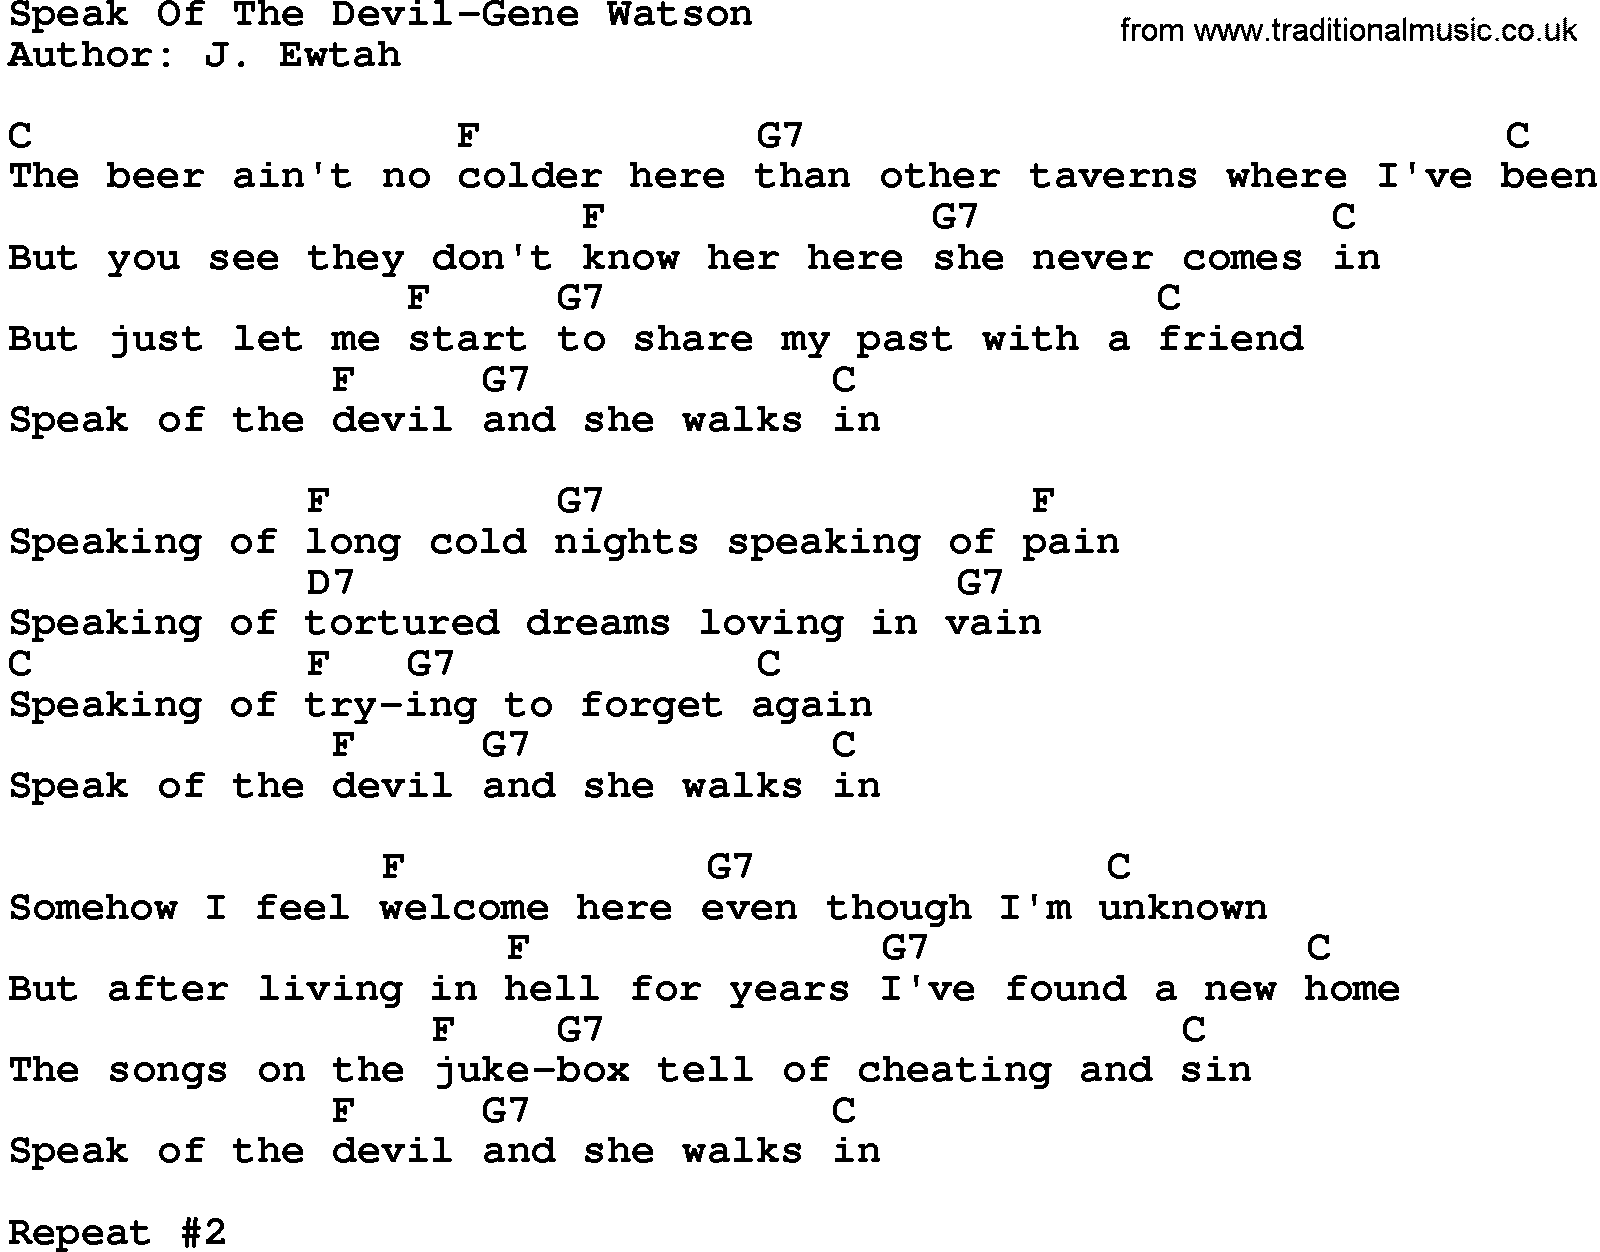 Country music song: Speak Of The Devil-Gene Watson lyrics and chords